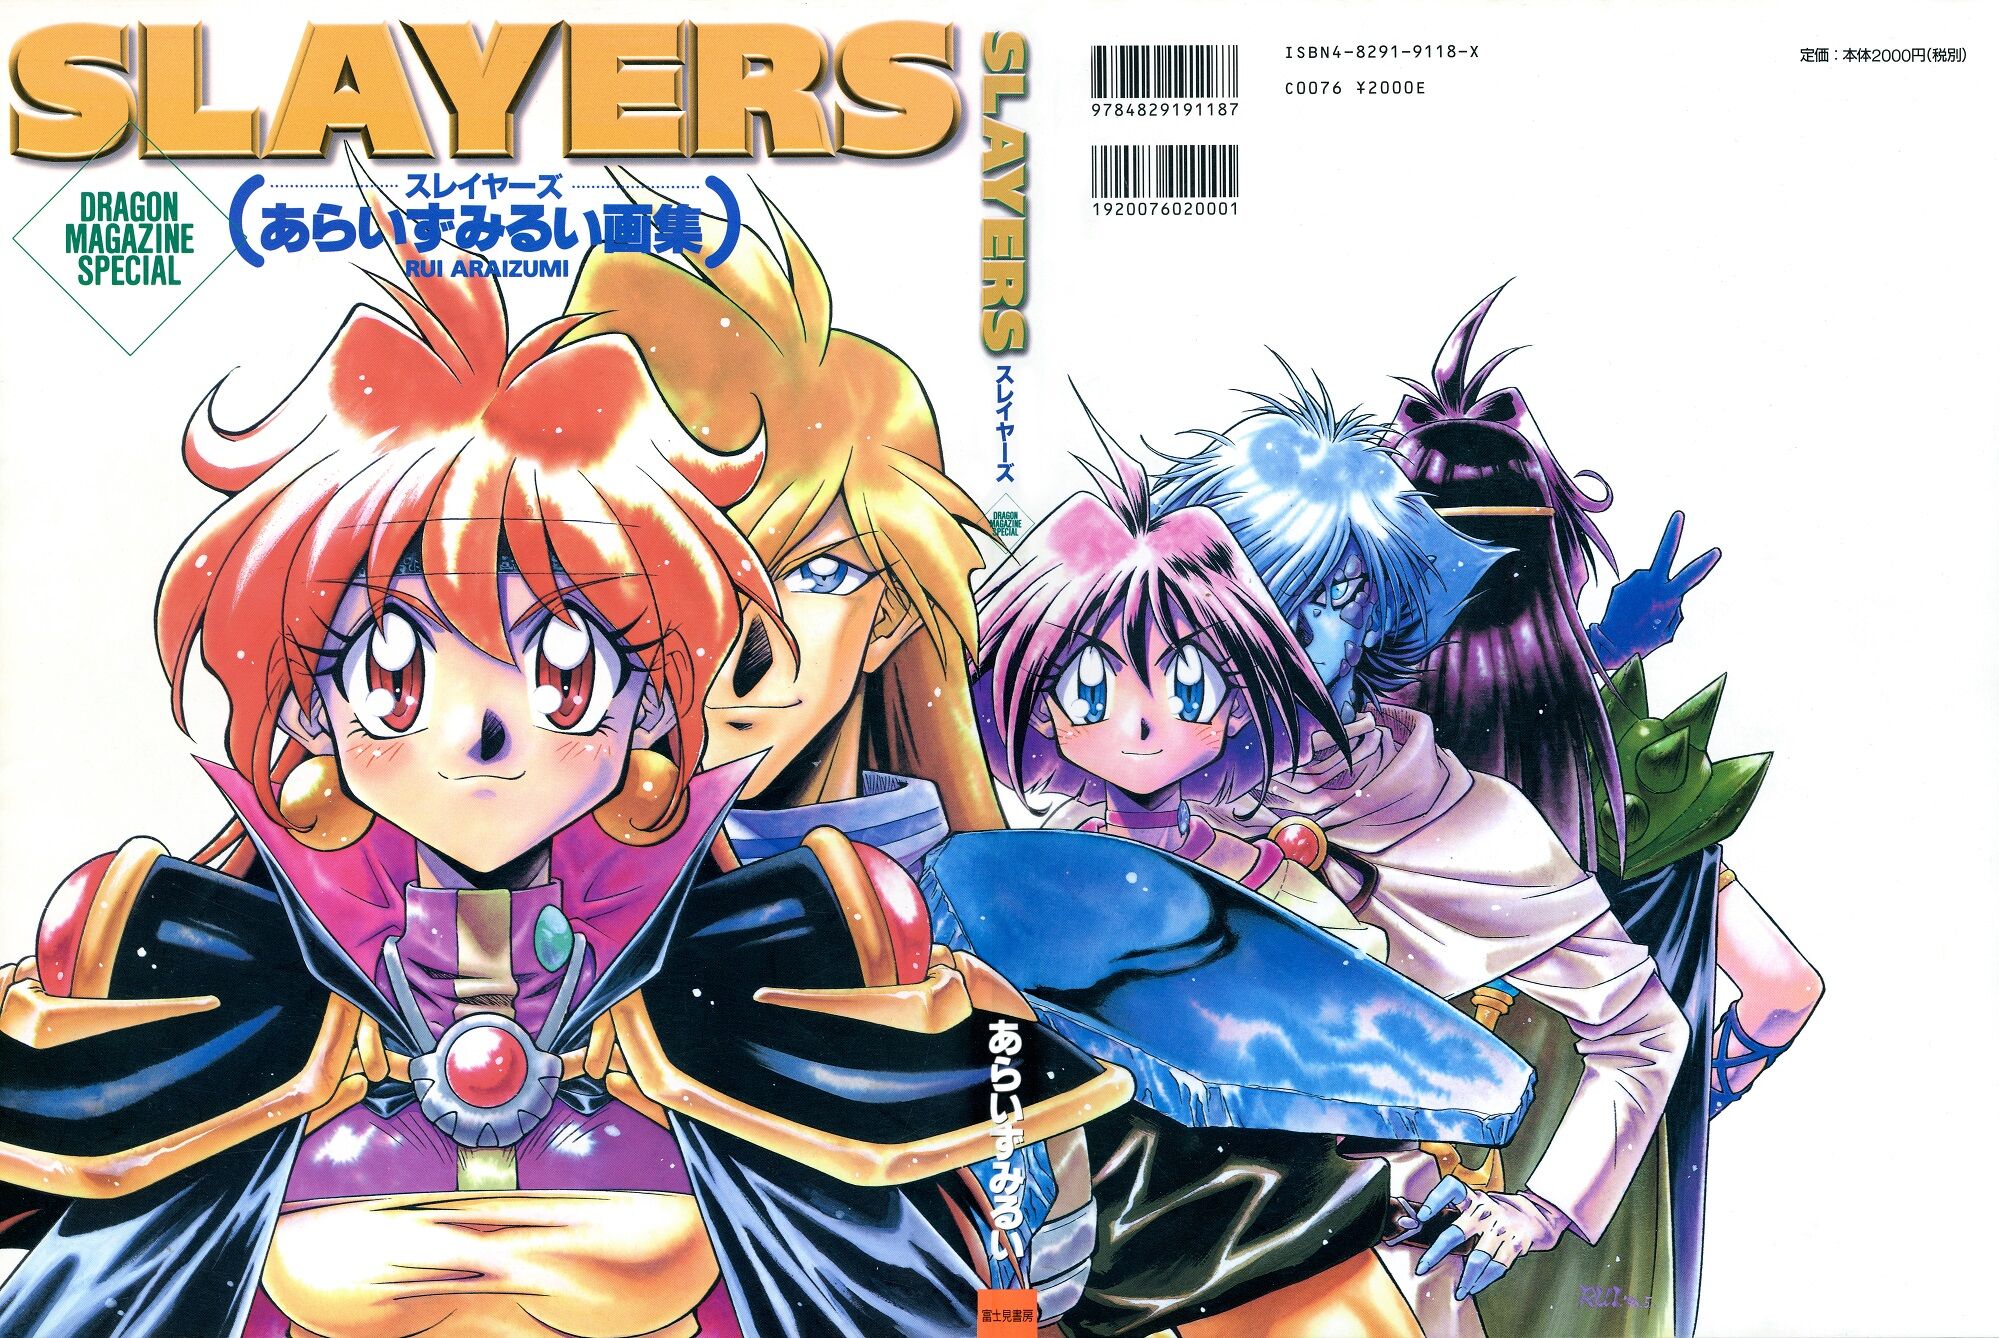 Slayers Dragon Magazine Special (Japanese Anime & Manga Artbook